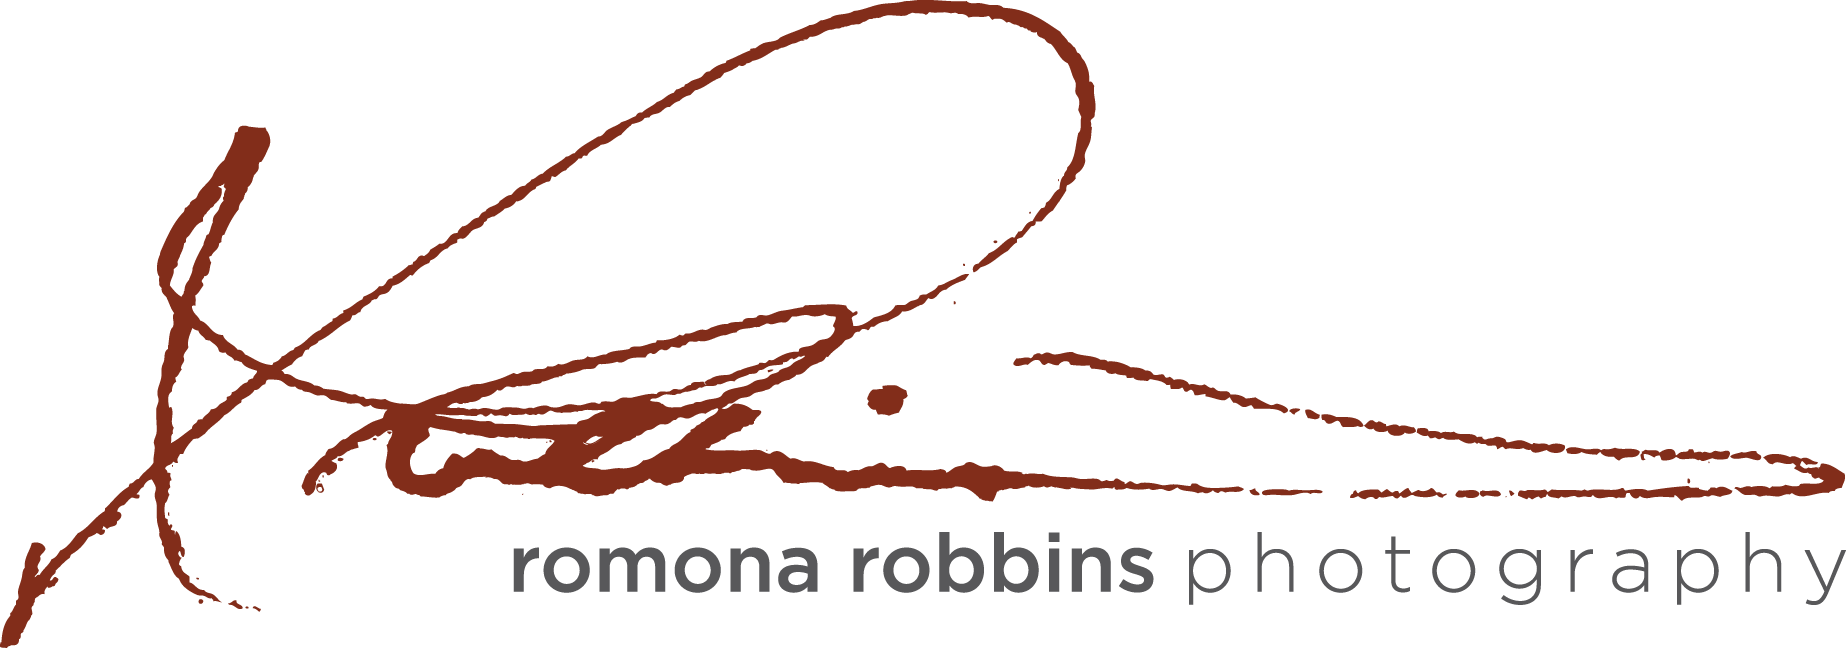 Romona Robbins's Portfolio